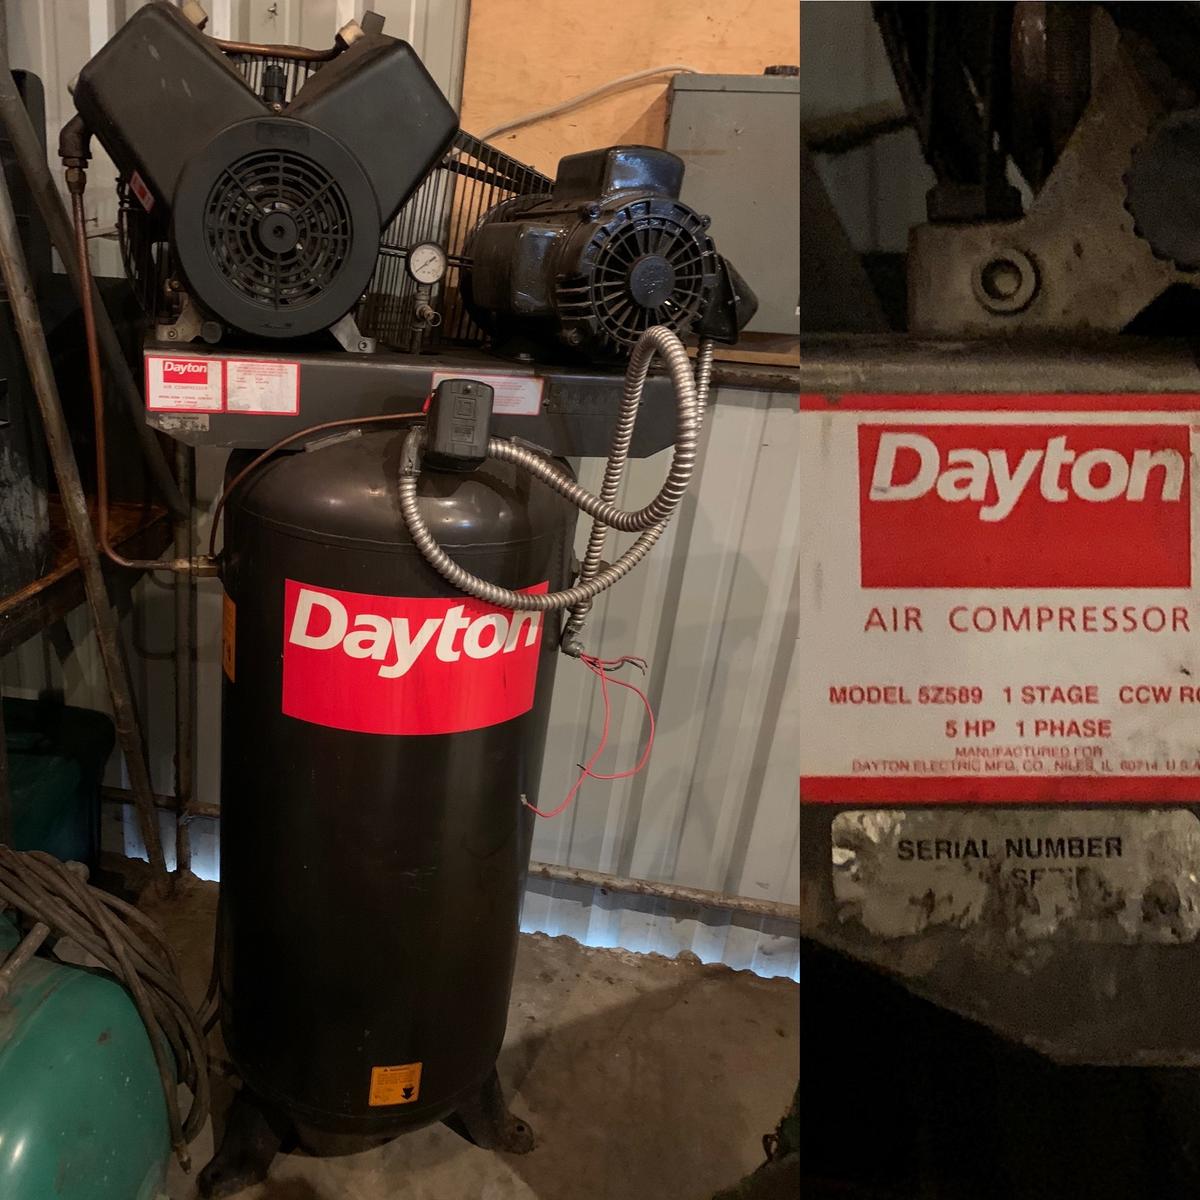 Dayton Aircompressor